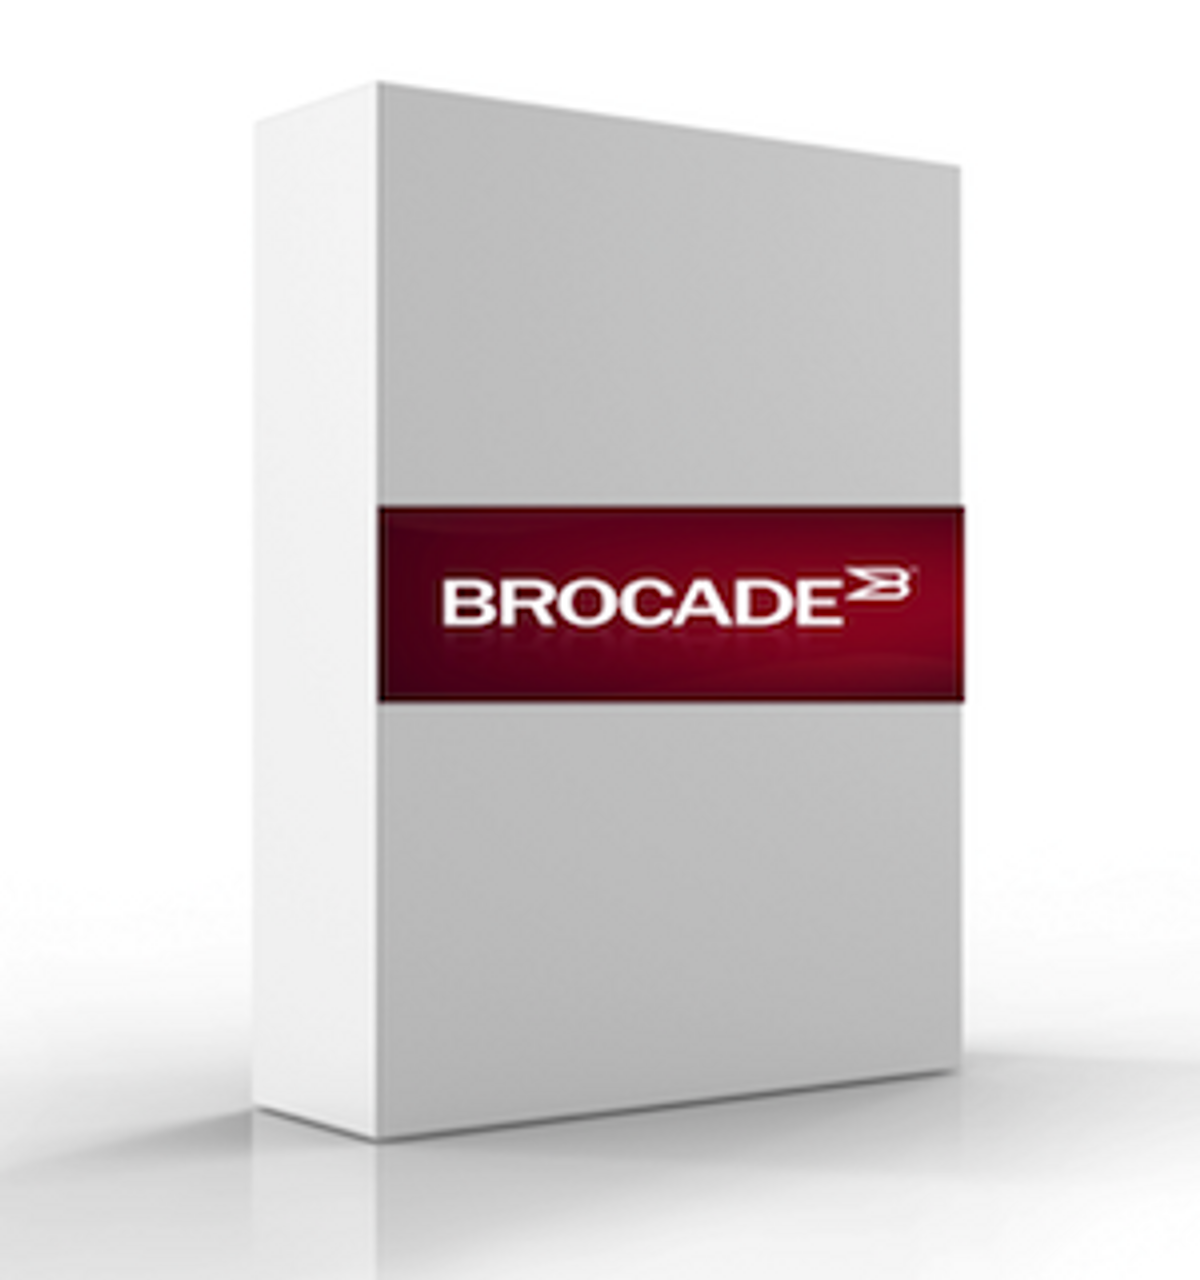 BR-SMEDTRK8-01 - Brocade ISL-TRUNKING LICENSE